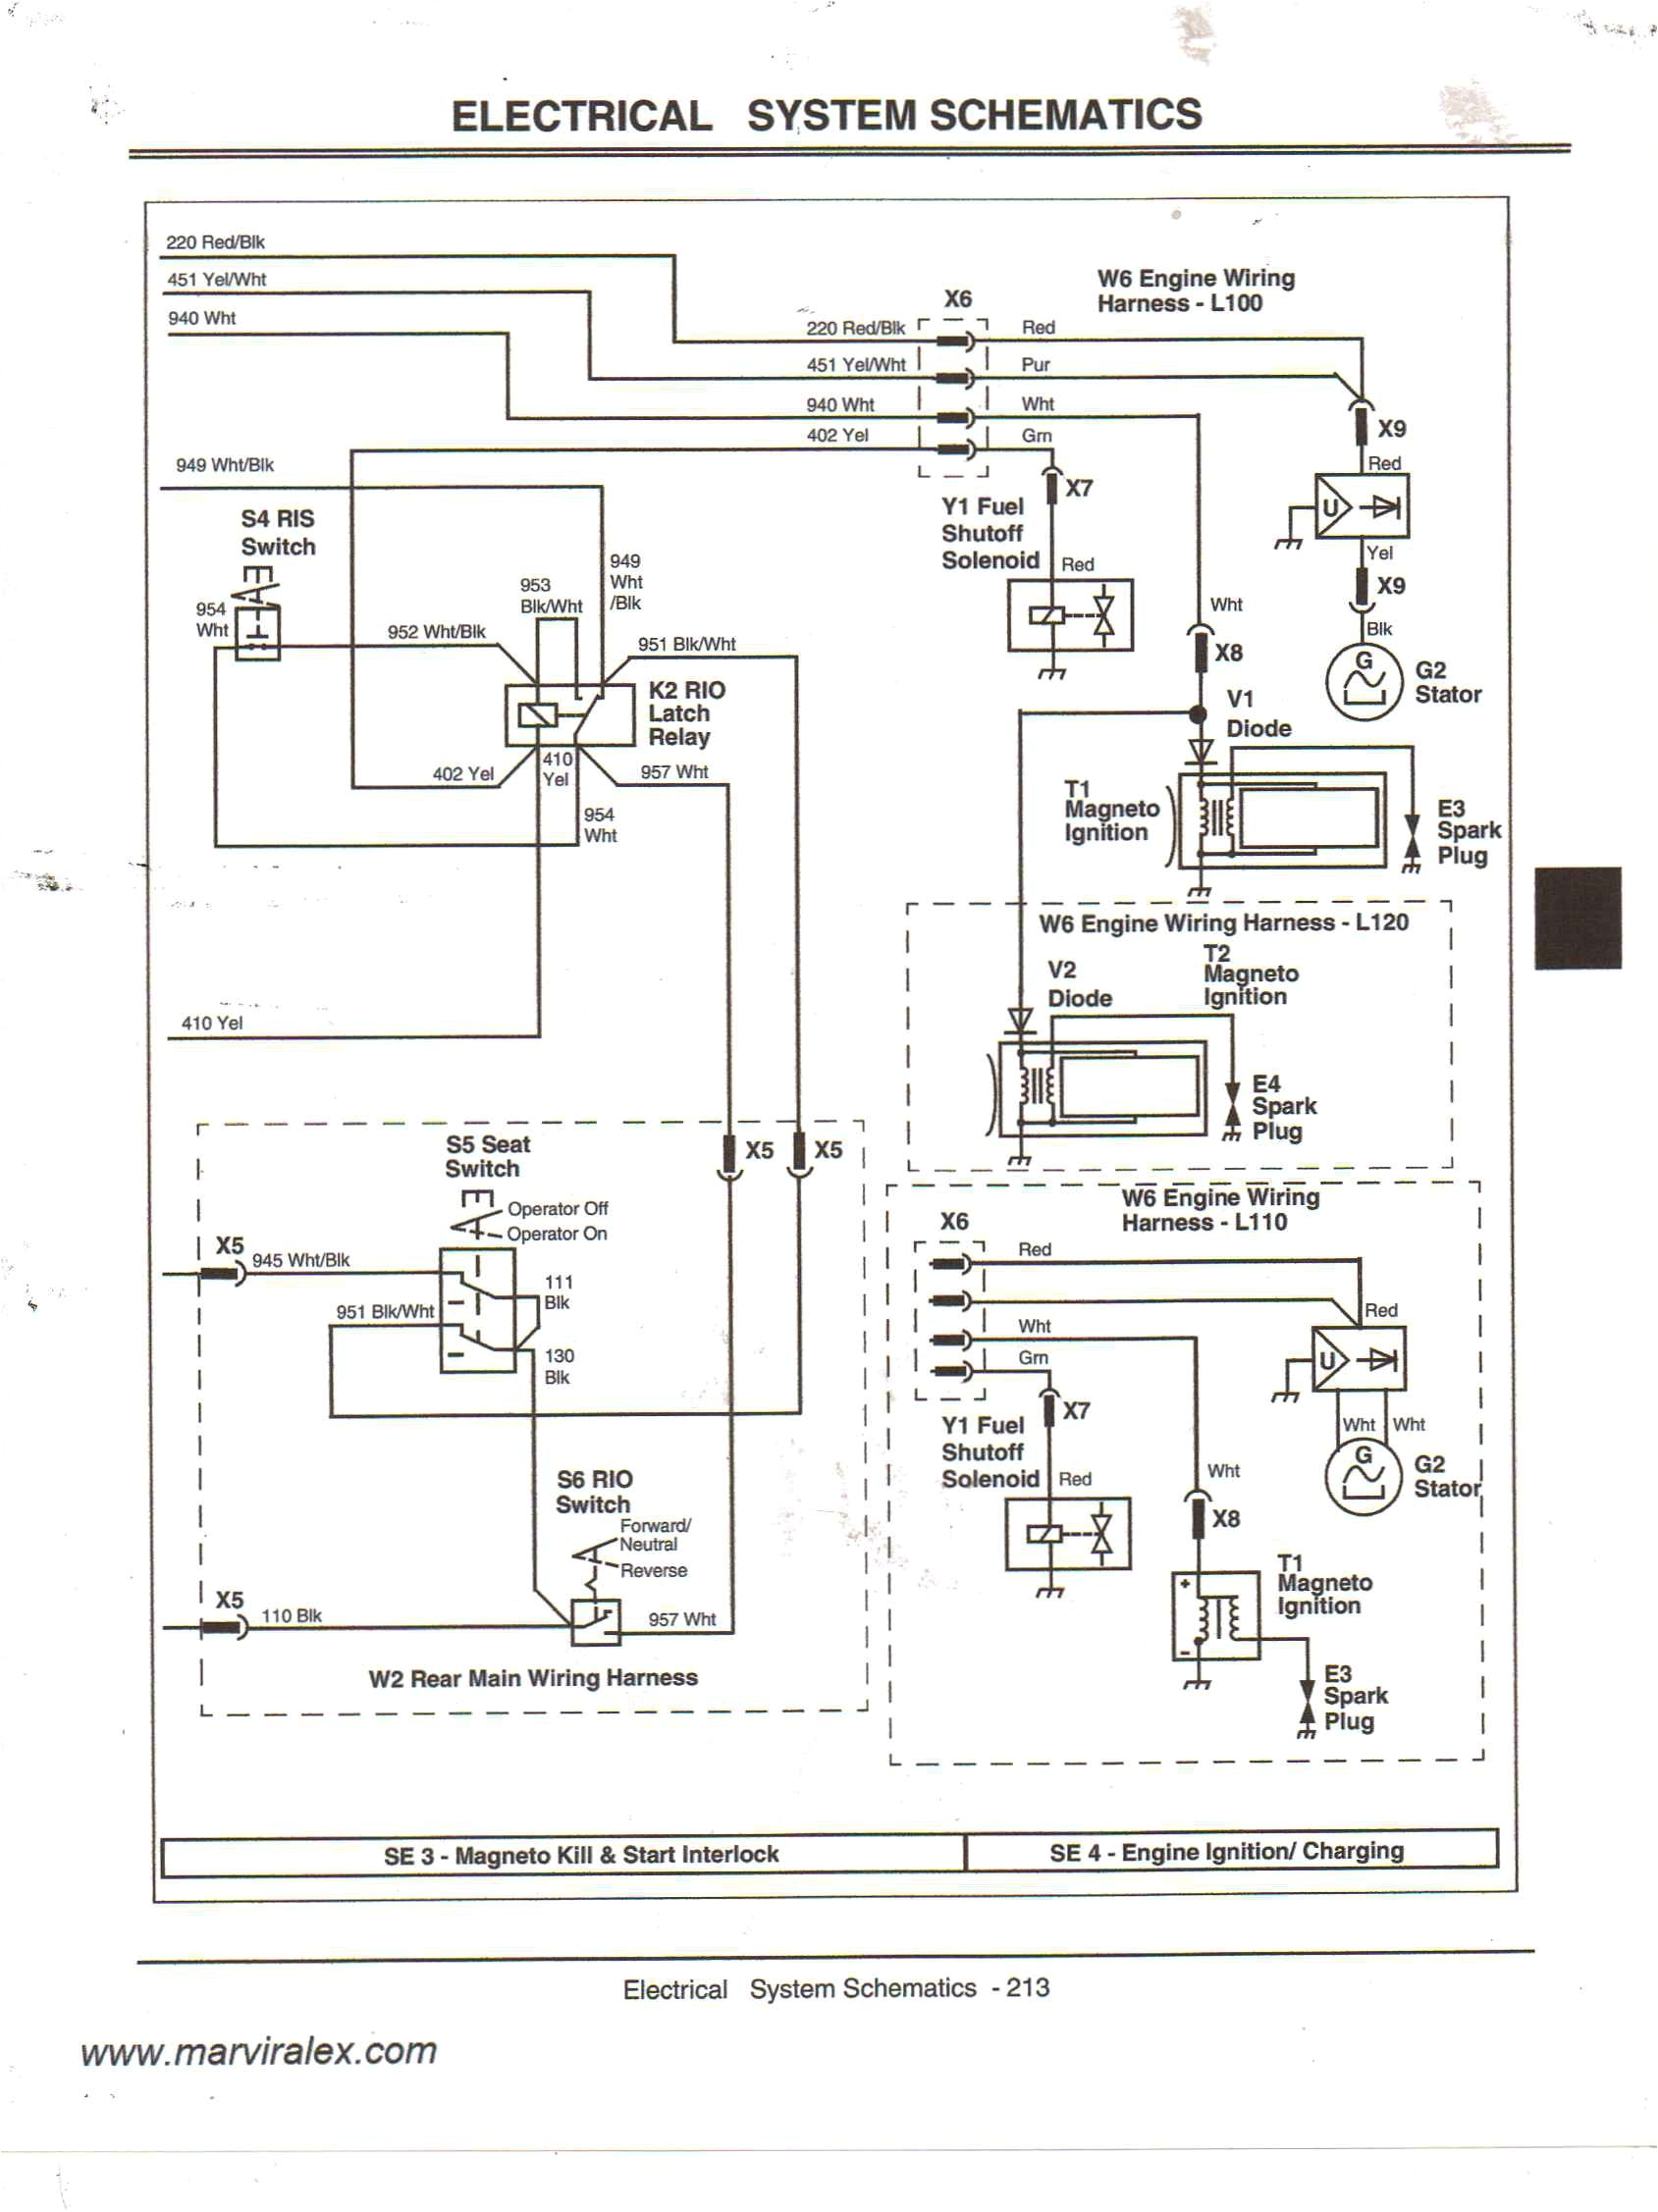 350 john deere wiring harness diagram wiring diagram files john deere 350 wiring diagram wiring diagram